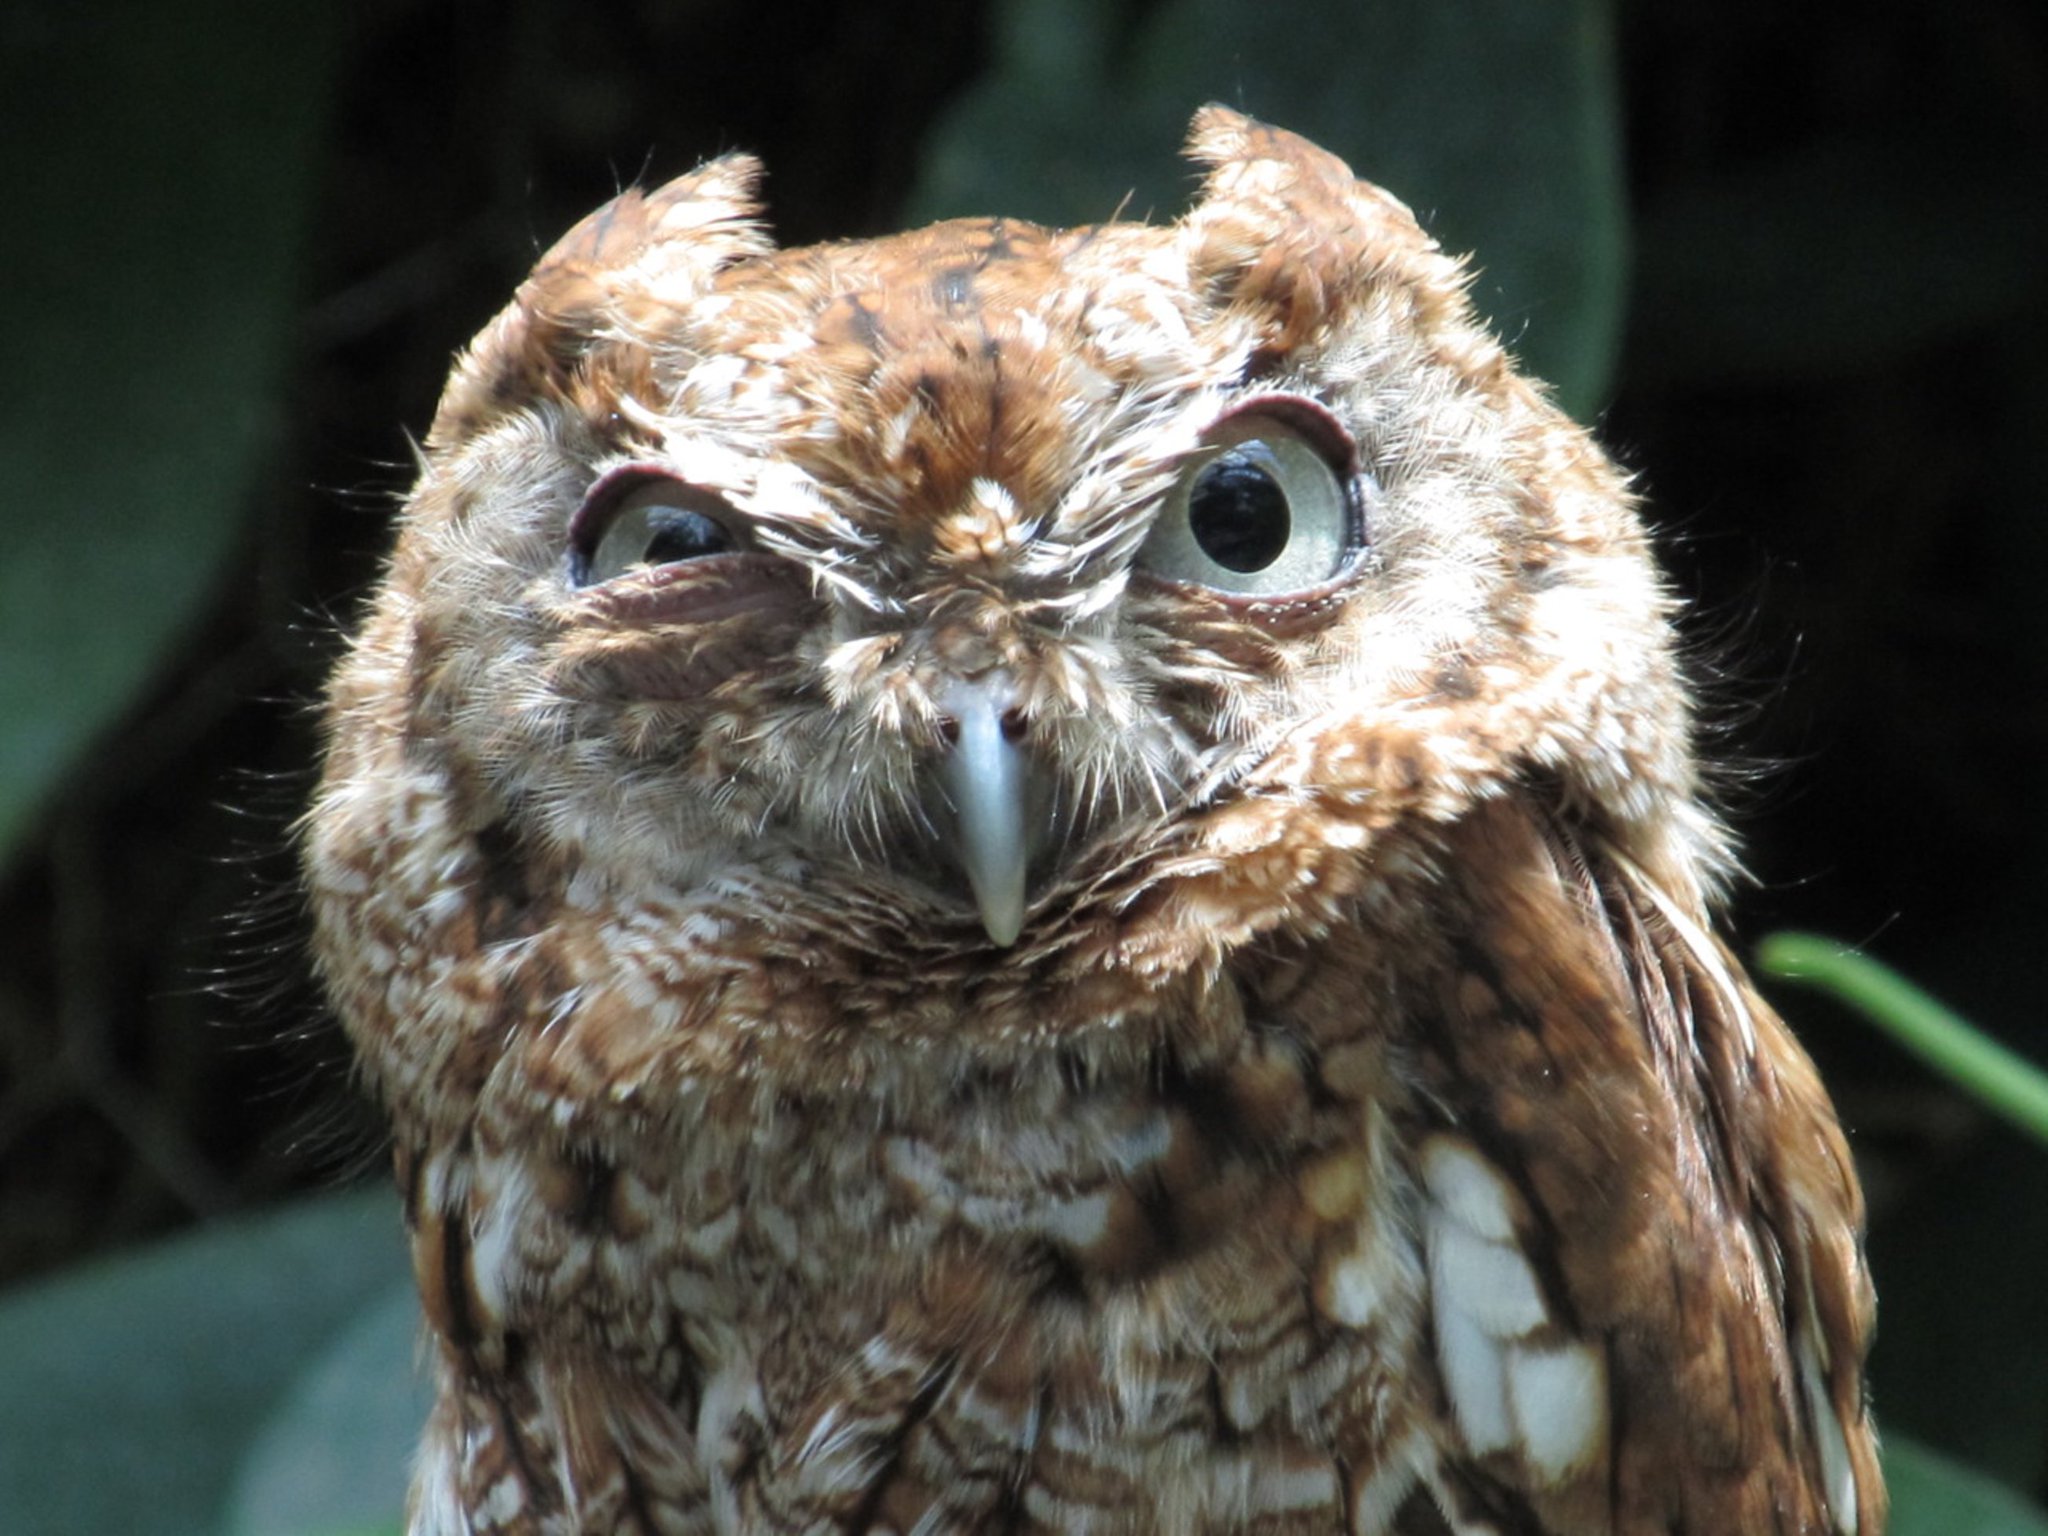 Owl Tickling Time on Twitter.